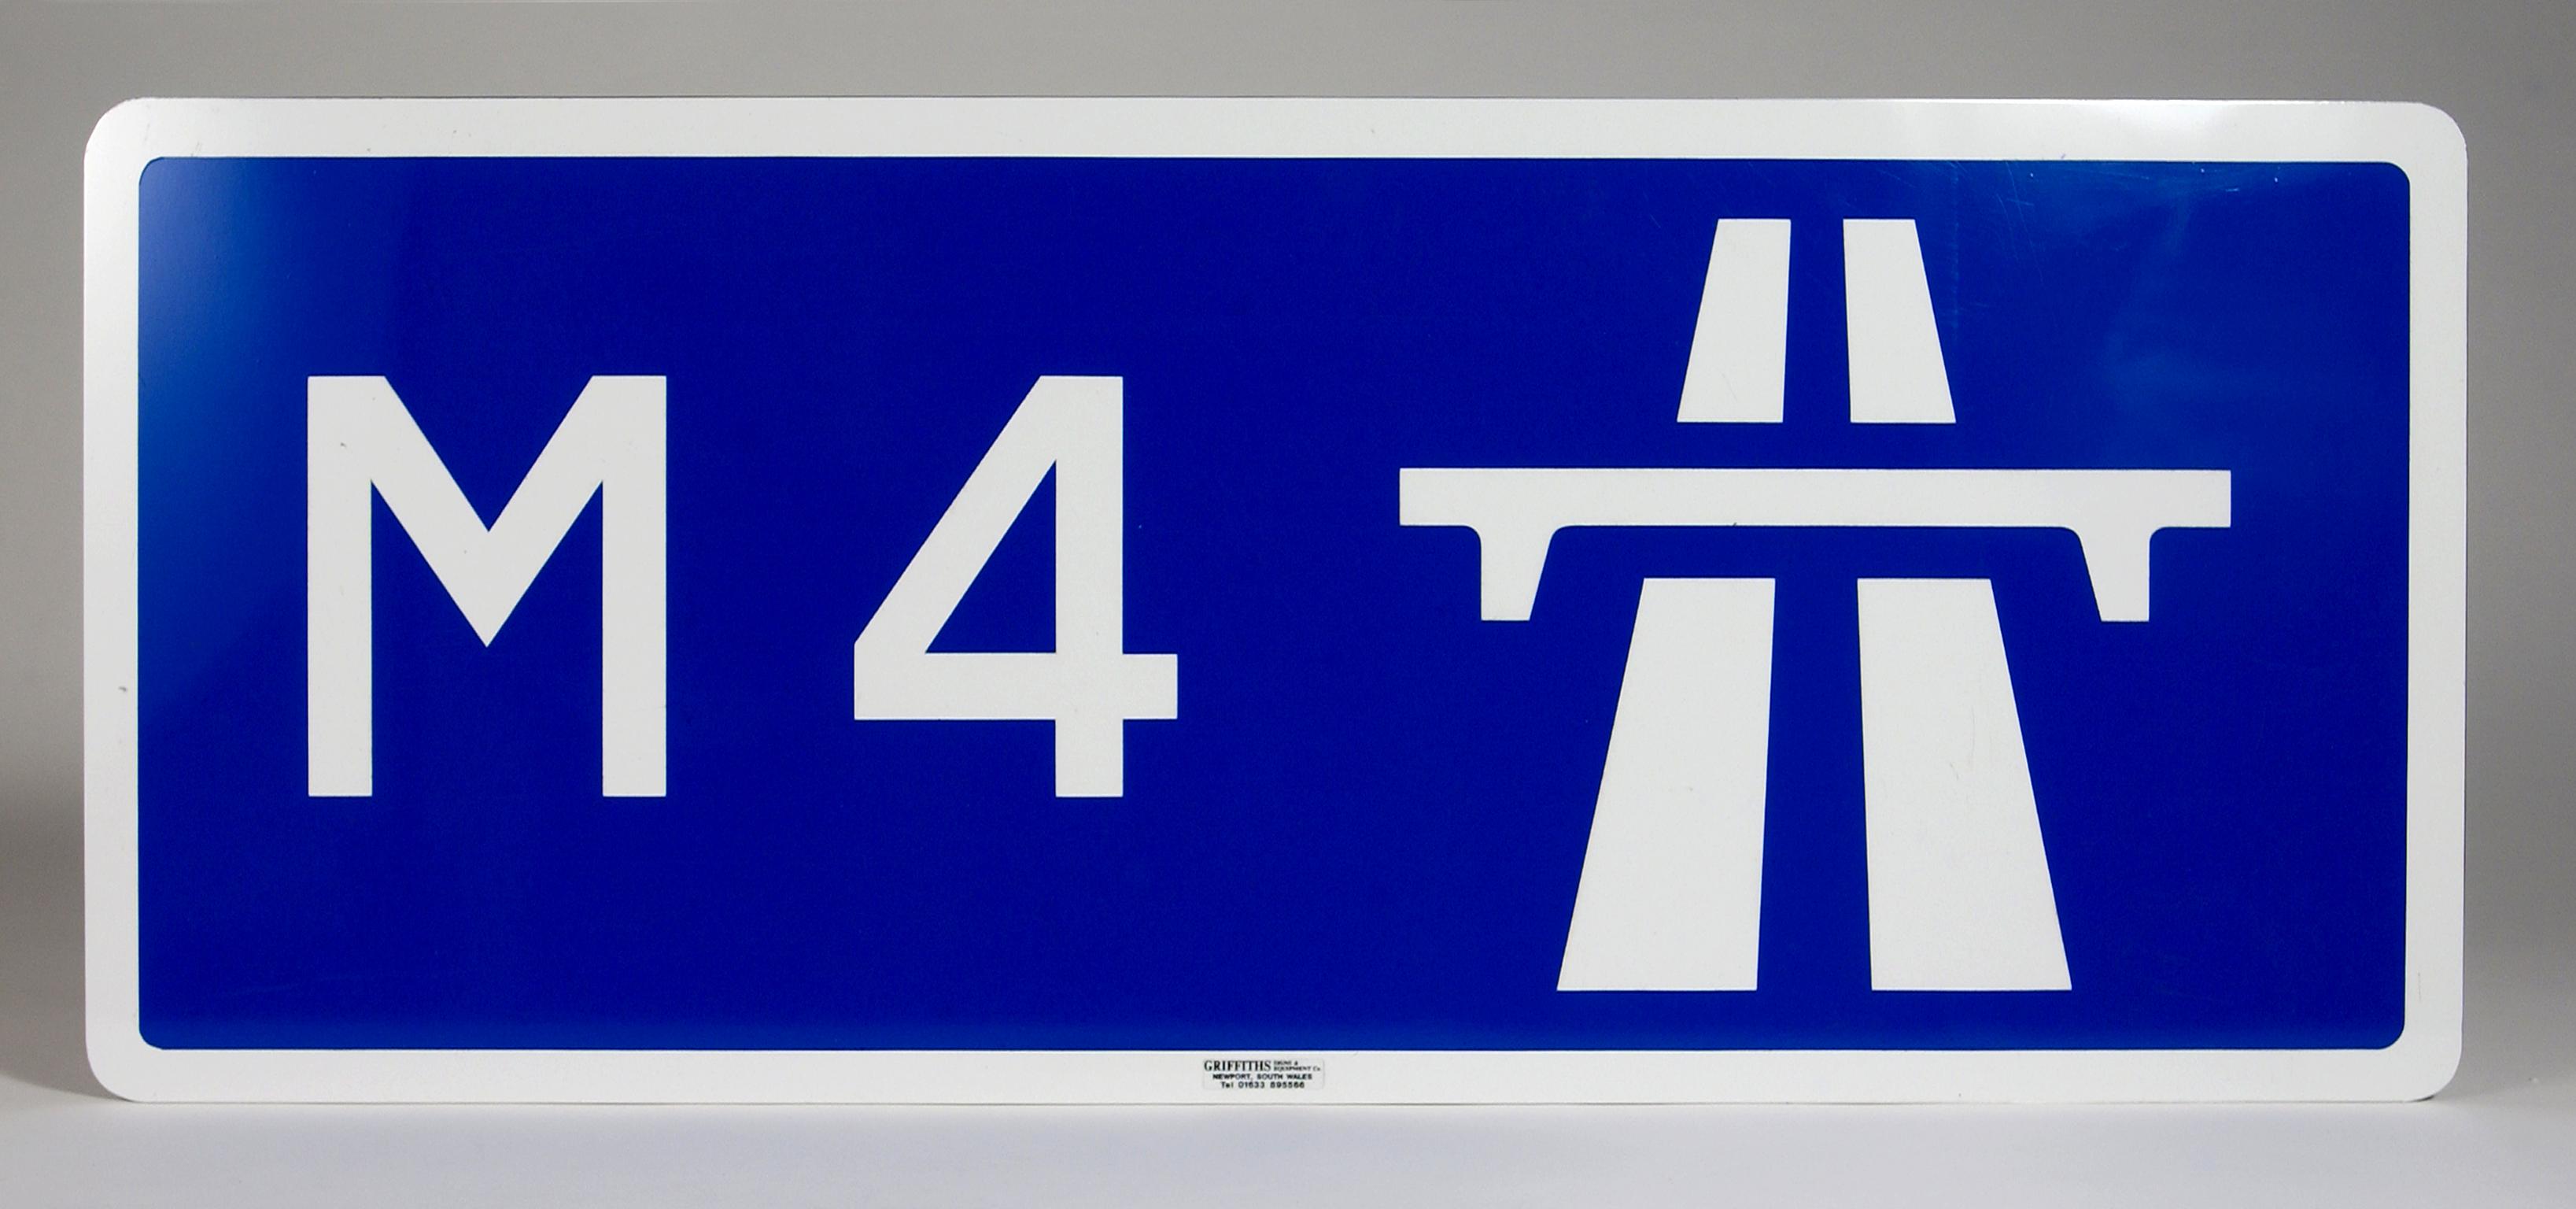 M4 motorway sign